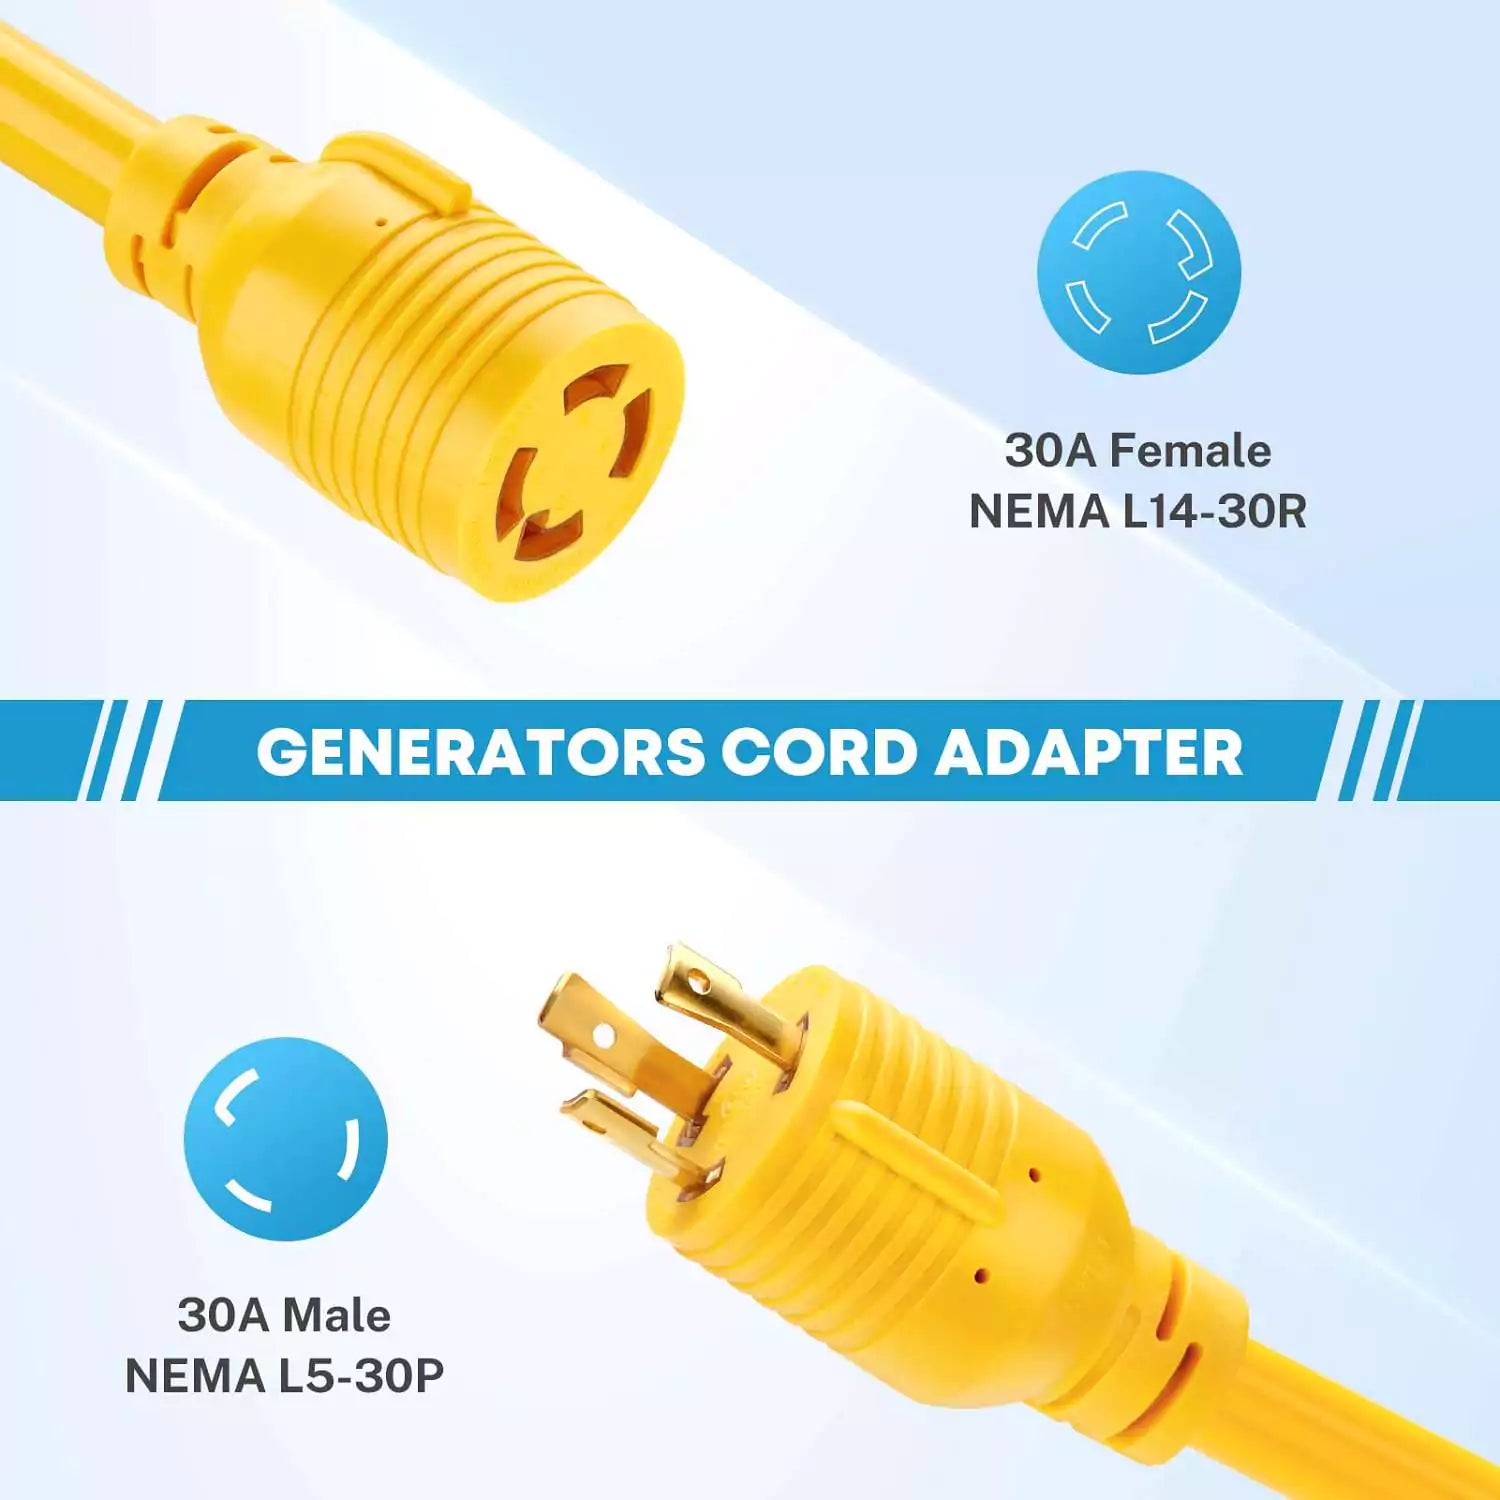 30a female NEMA L14-30R generators cord adapter